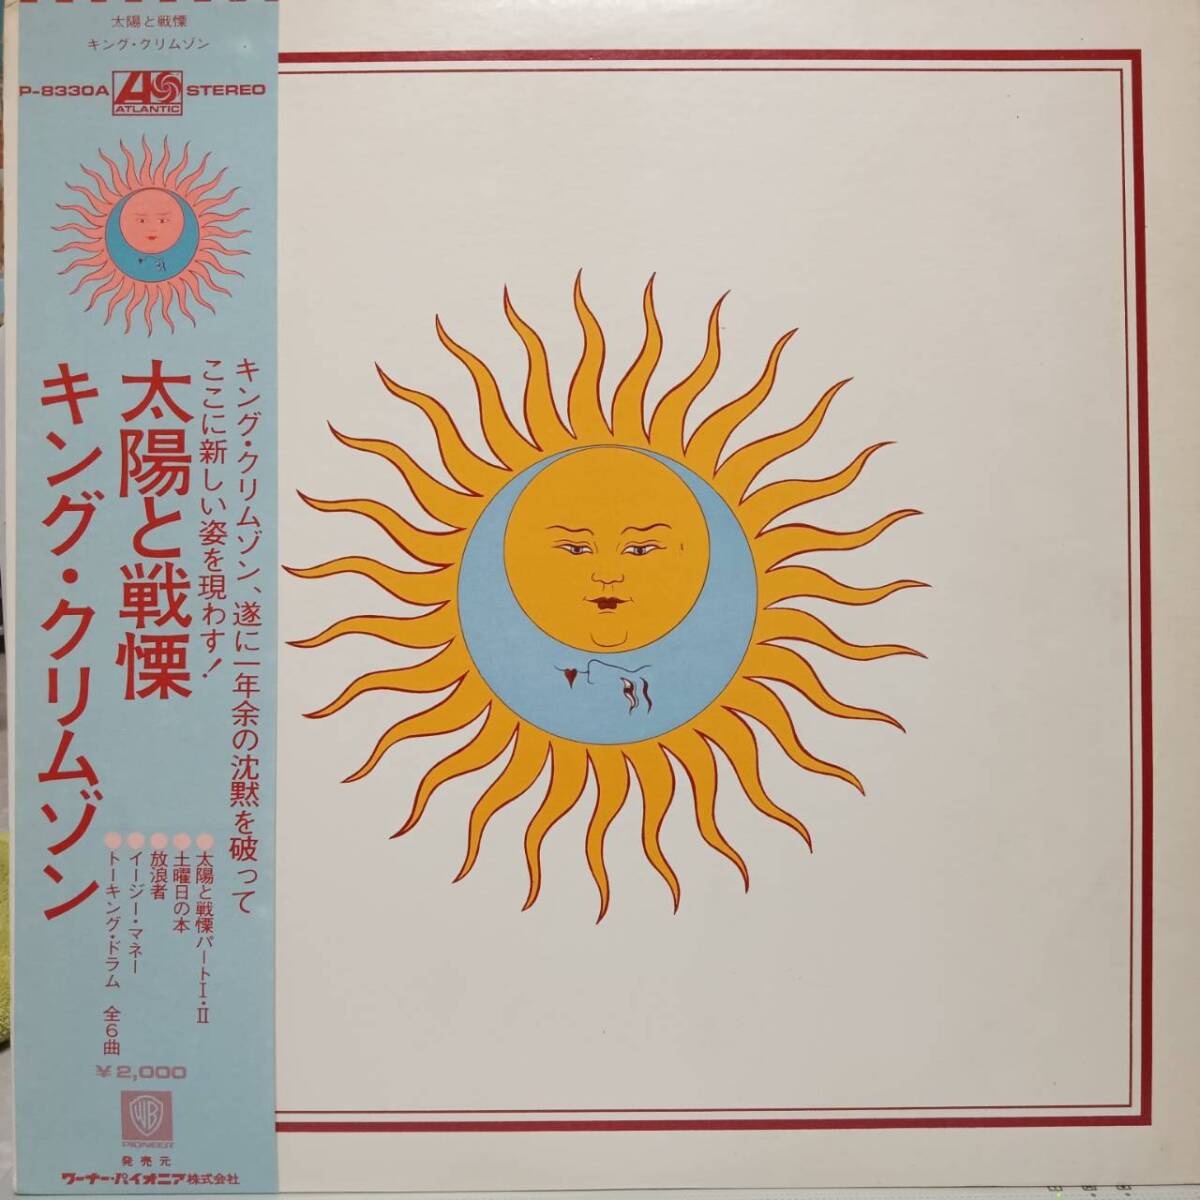 PROMO日本盤LP帯付き 見本盤 白ラベル King Crimson / Larks' Tongues In Aspic 1973年 ATLANTIC P-8330A 太陽と戦慄キング・クリムゾンOBI_画像2